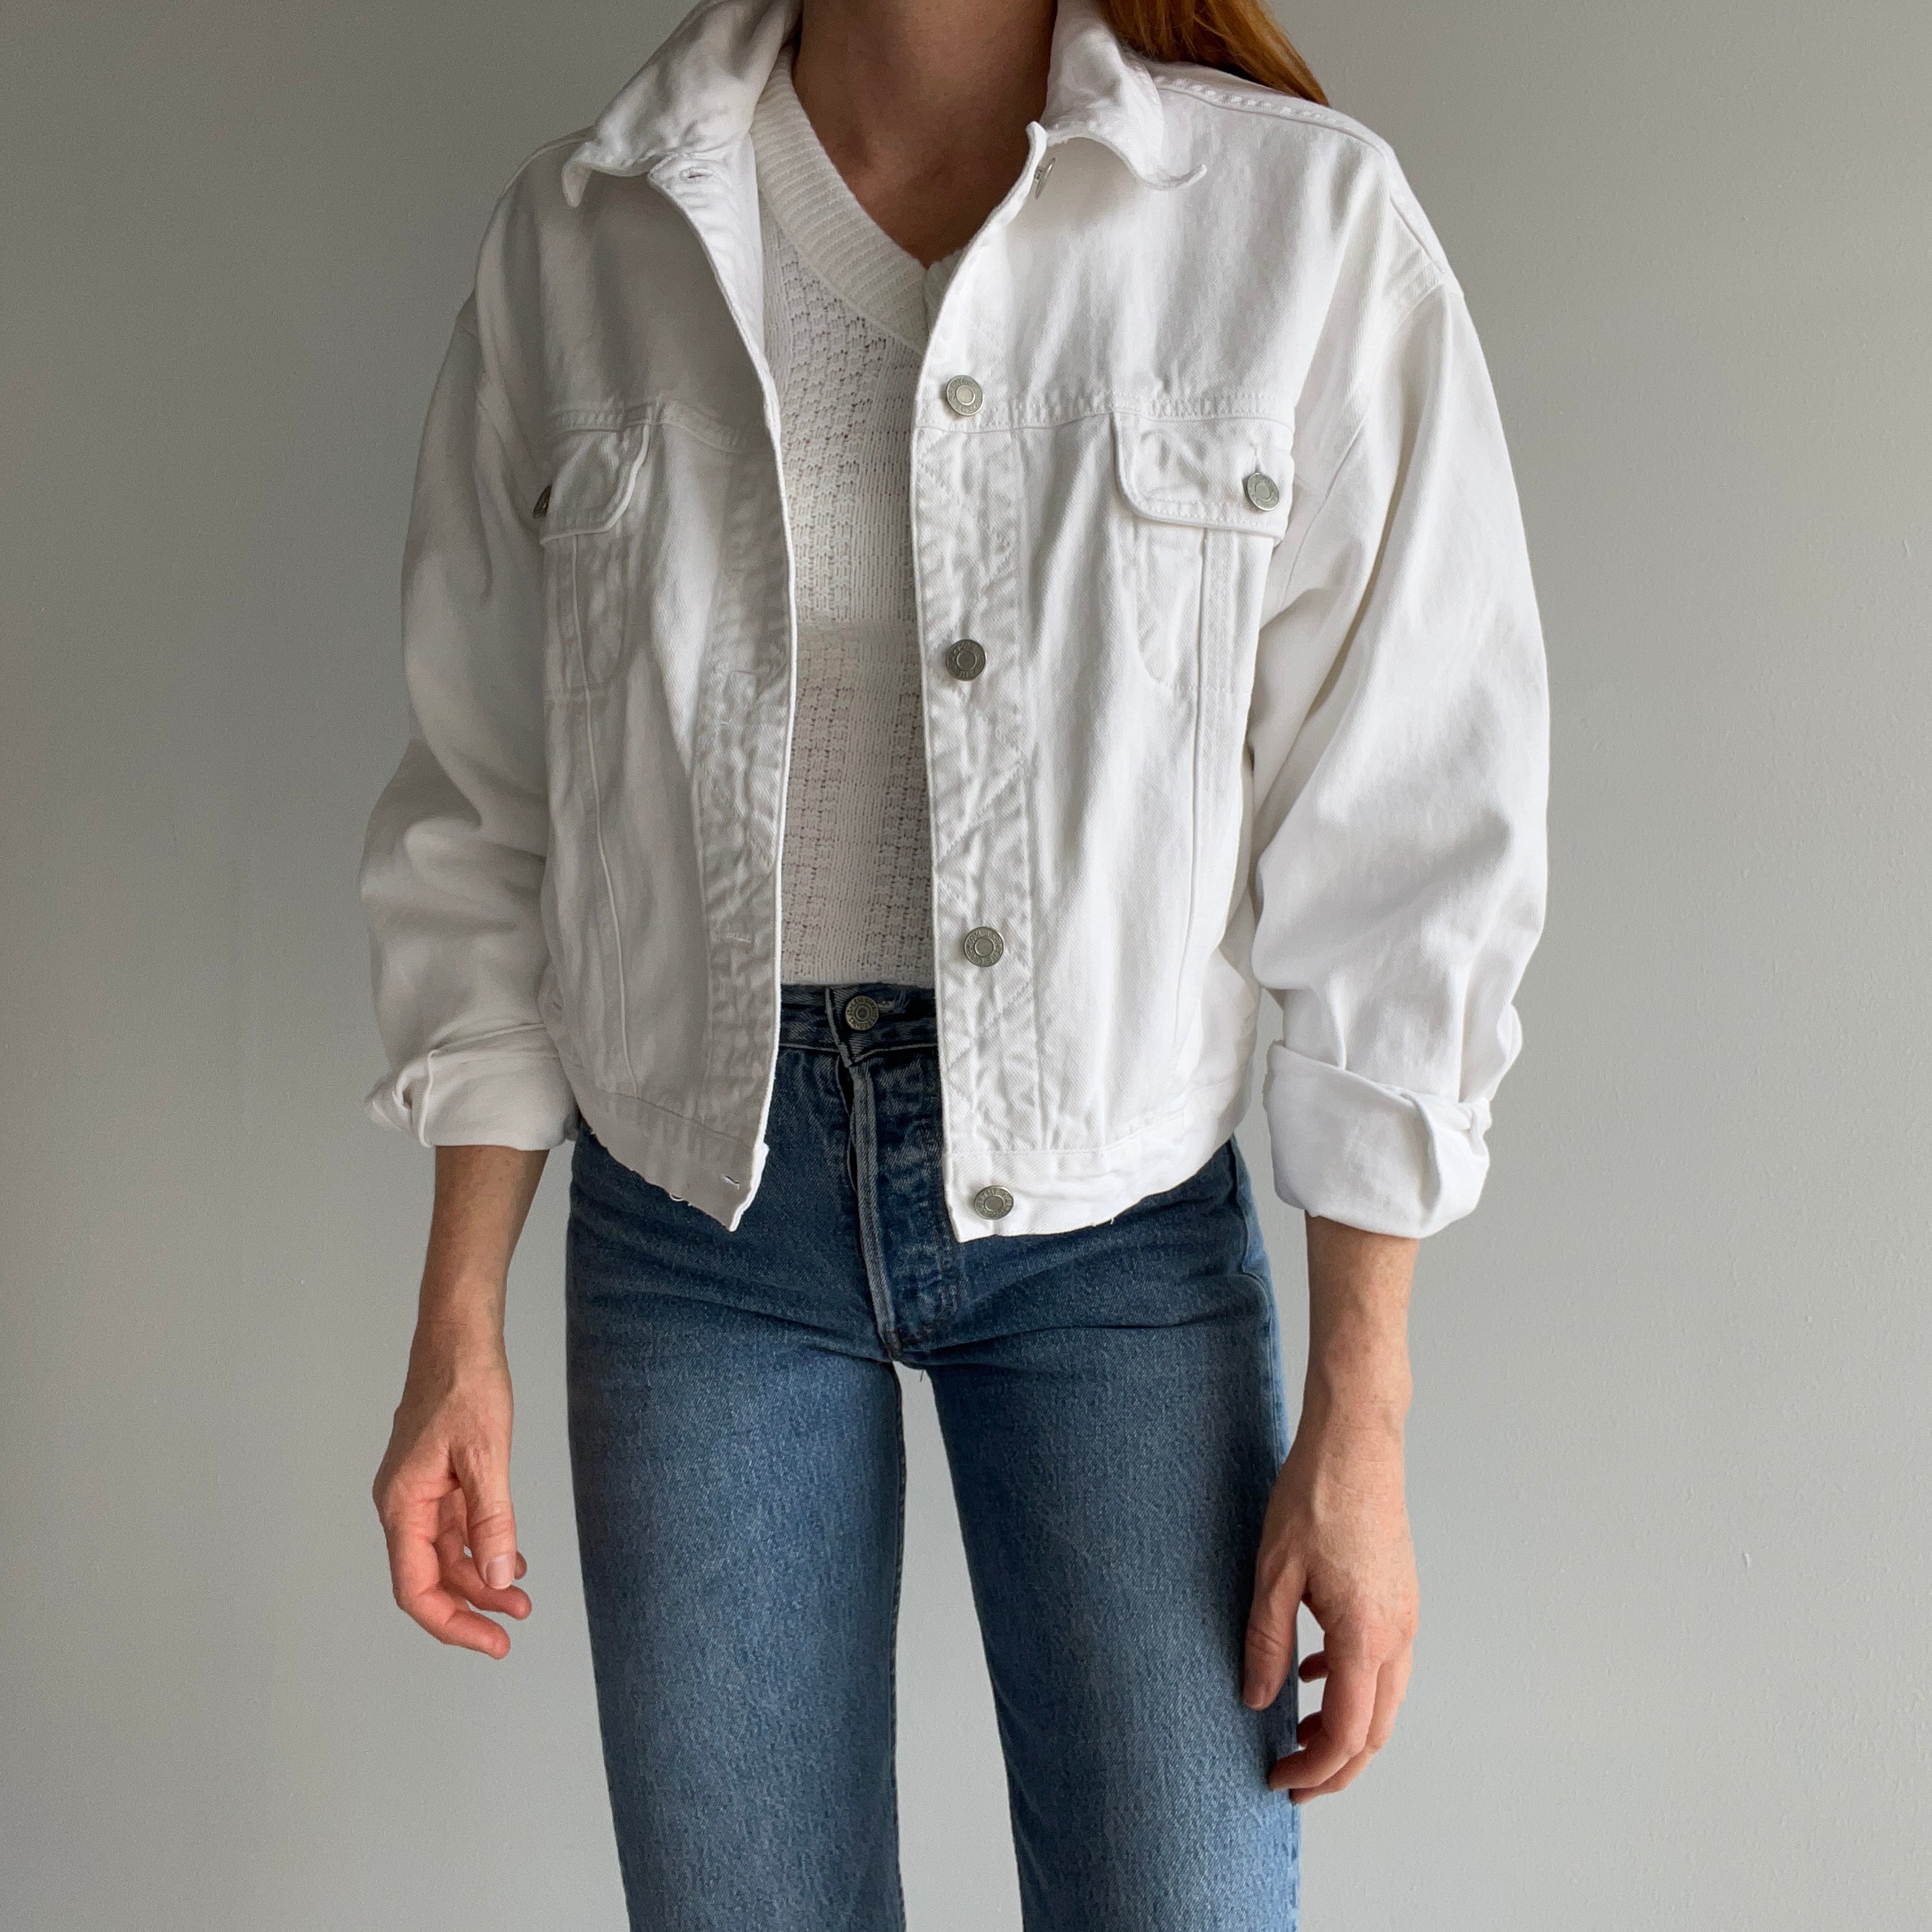 2000s white denim jacket women’s